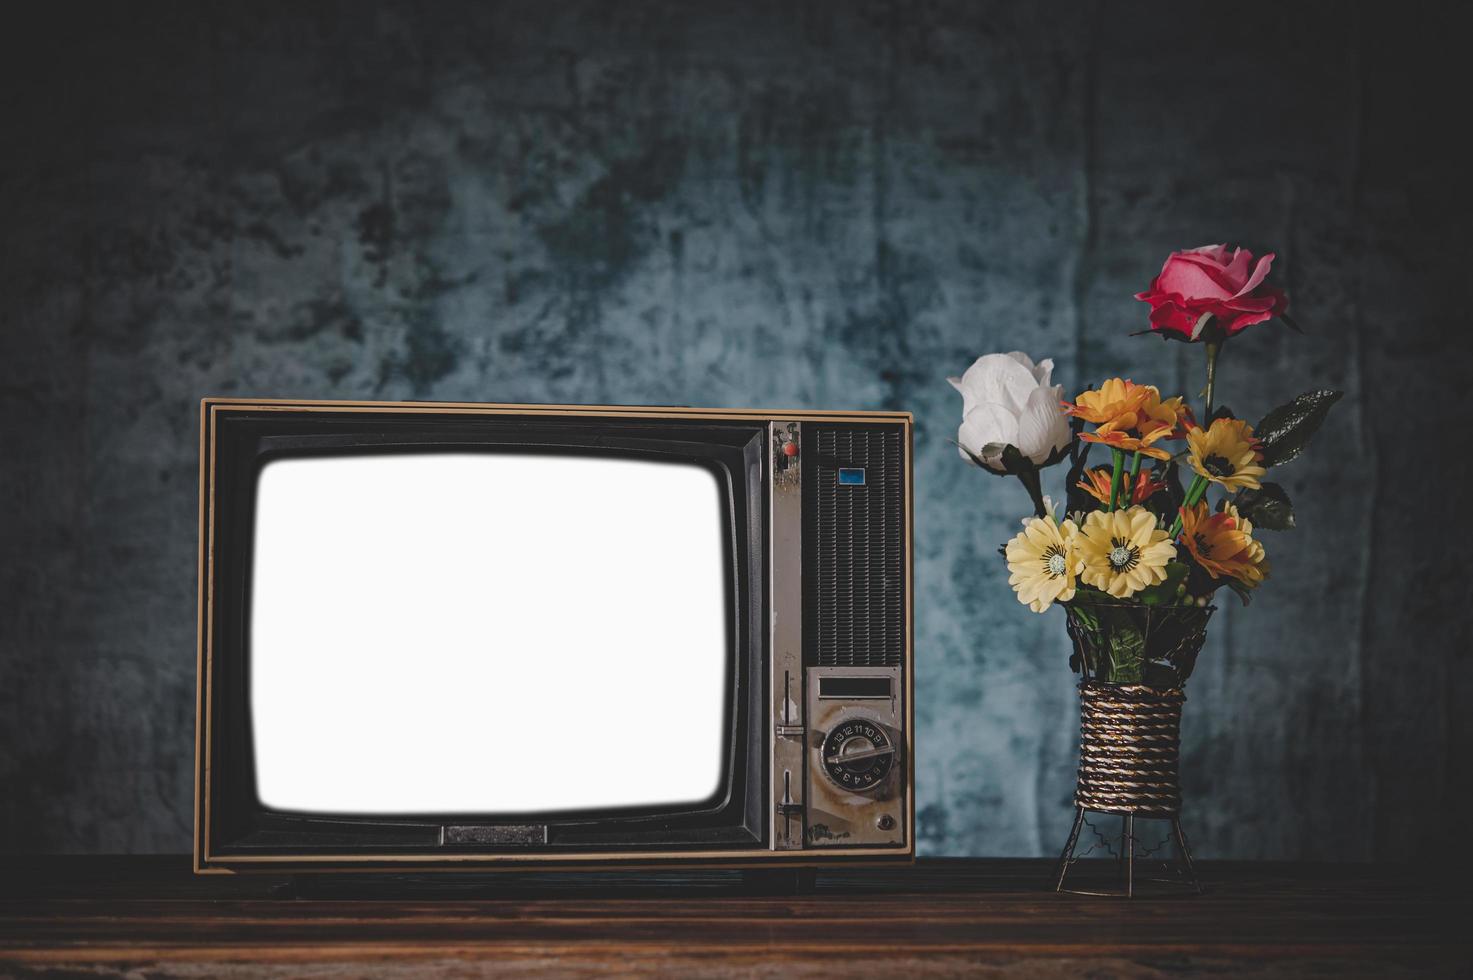 TV retro antiguo bodegón con floreros foto